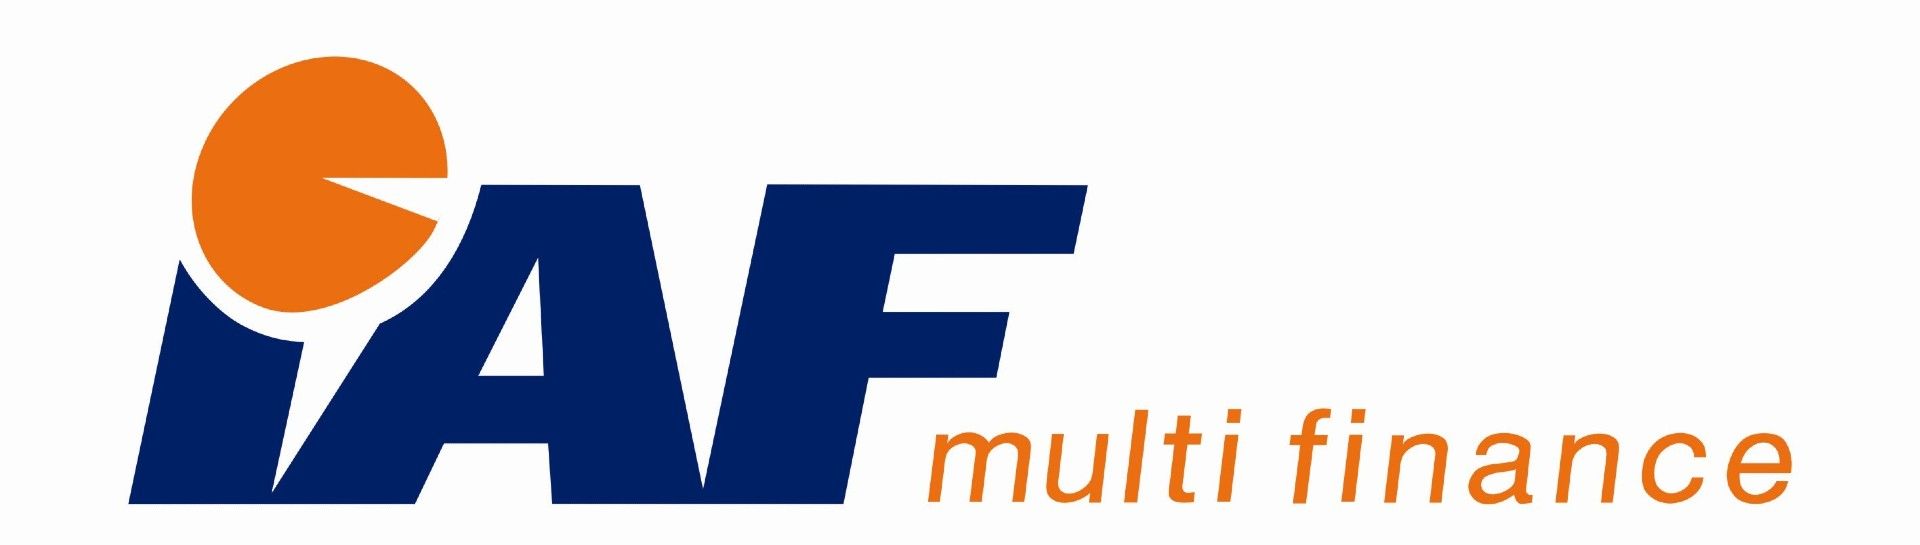 PT. ITC Auto Multifinance (PAYKU) logo